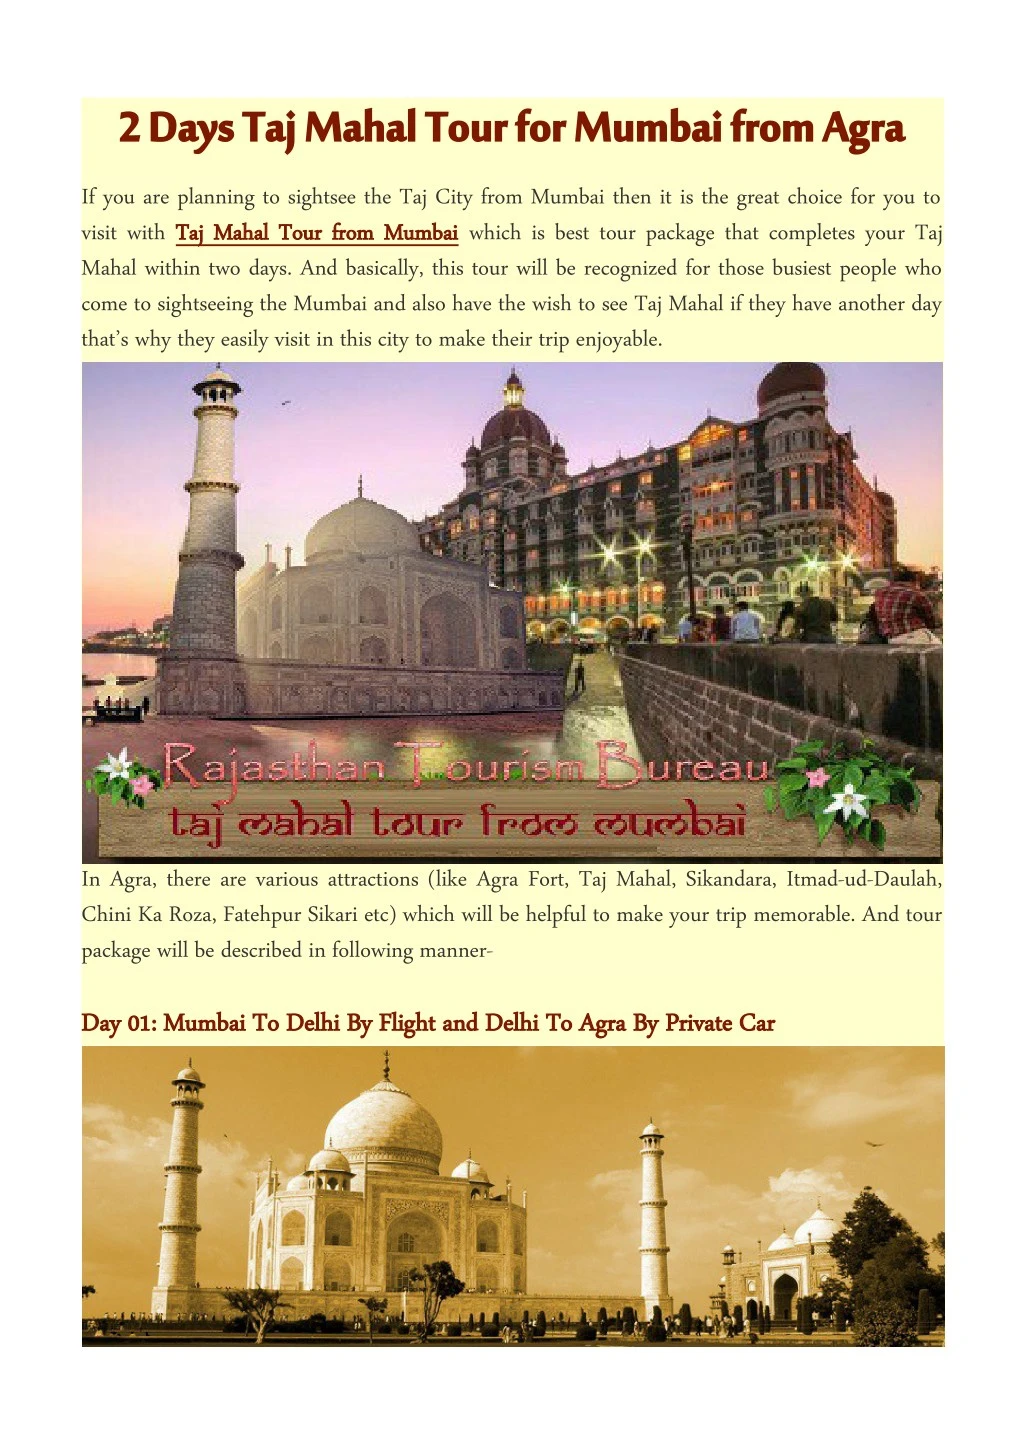 2 days taj mahal tour for mumbai from agra 2 days n.